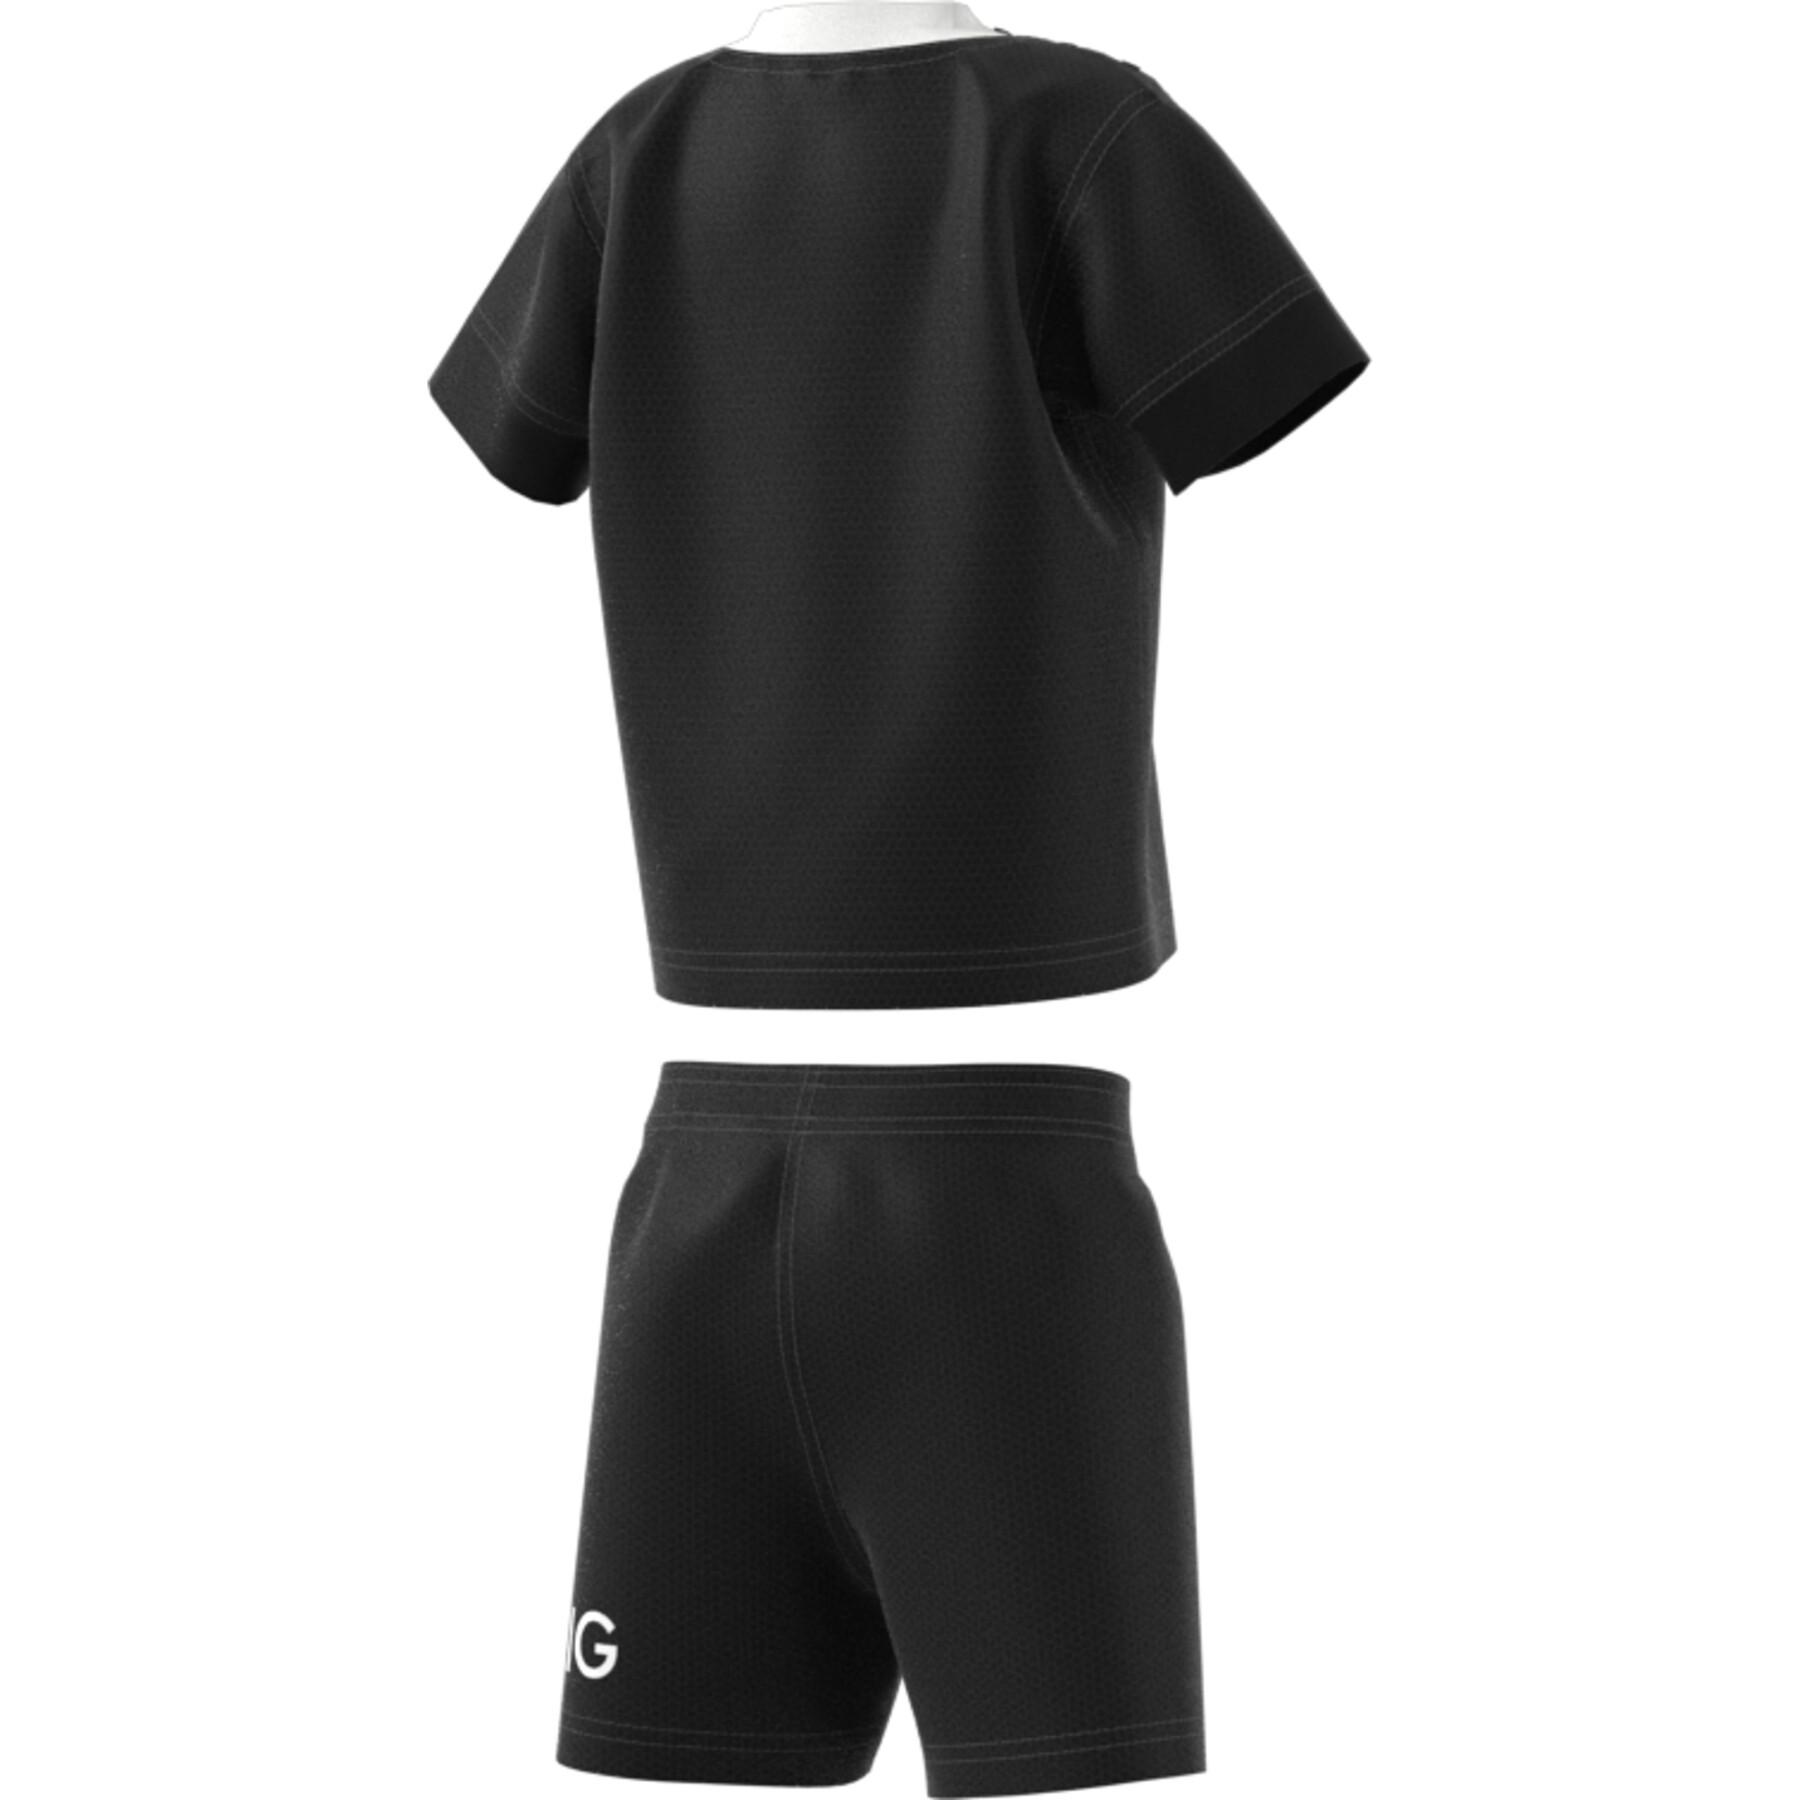 Abbigliamento per bambini home All Blacks Infants Kit